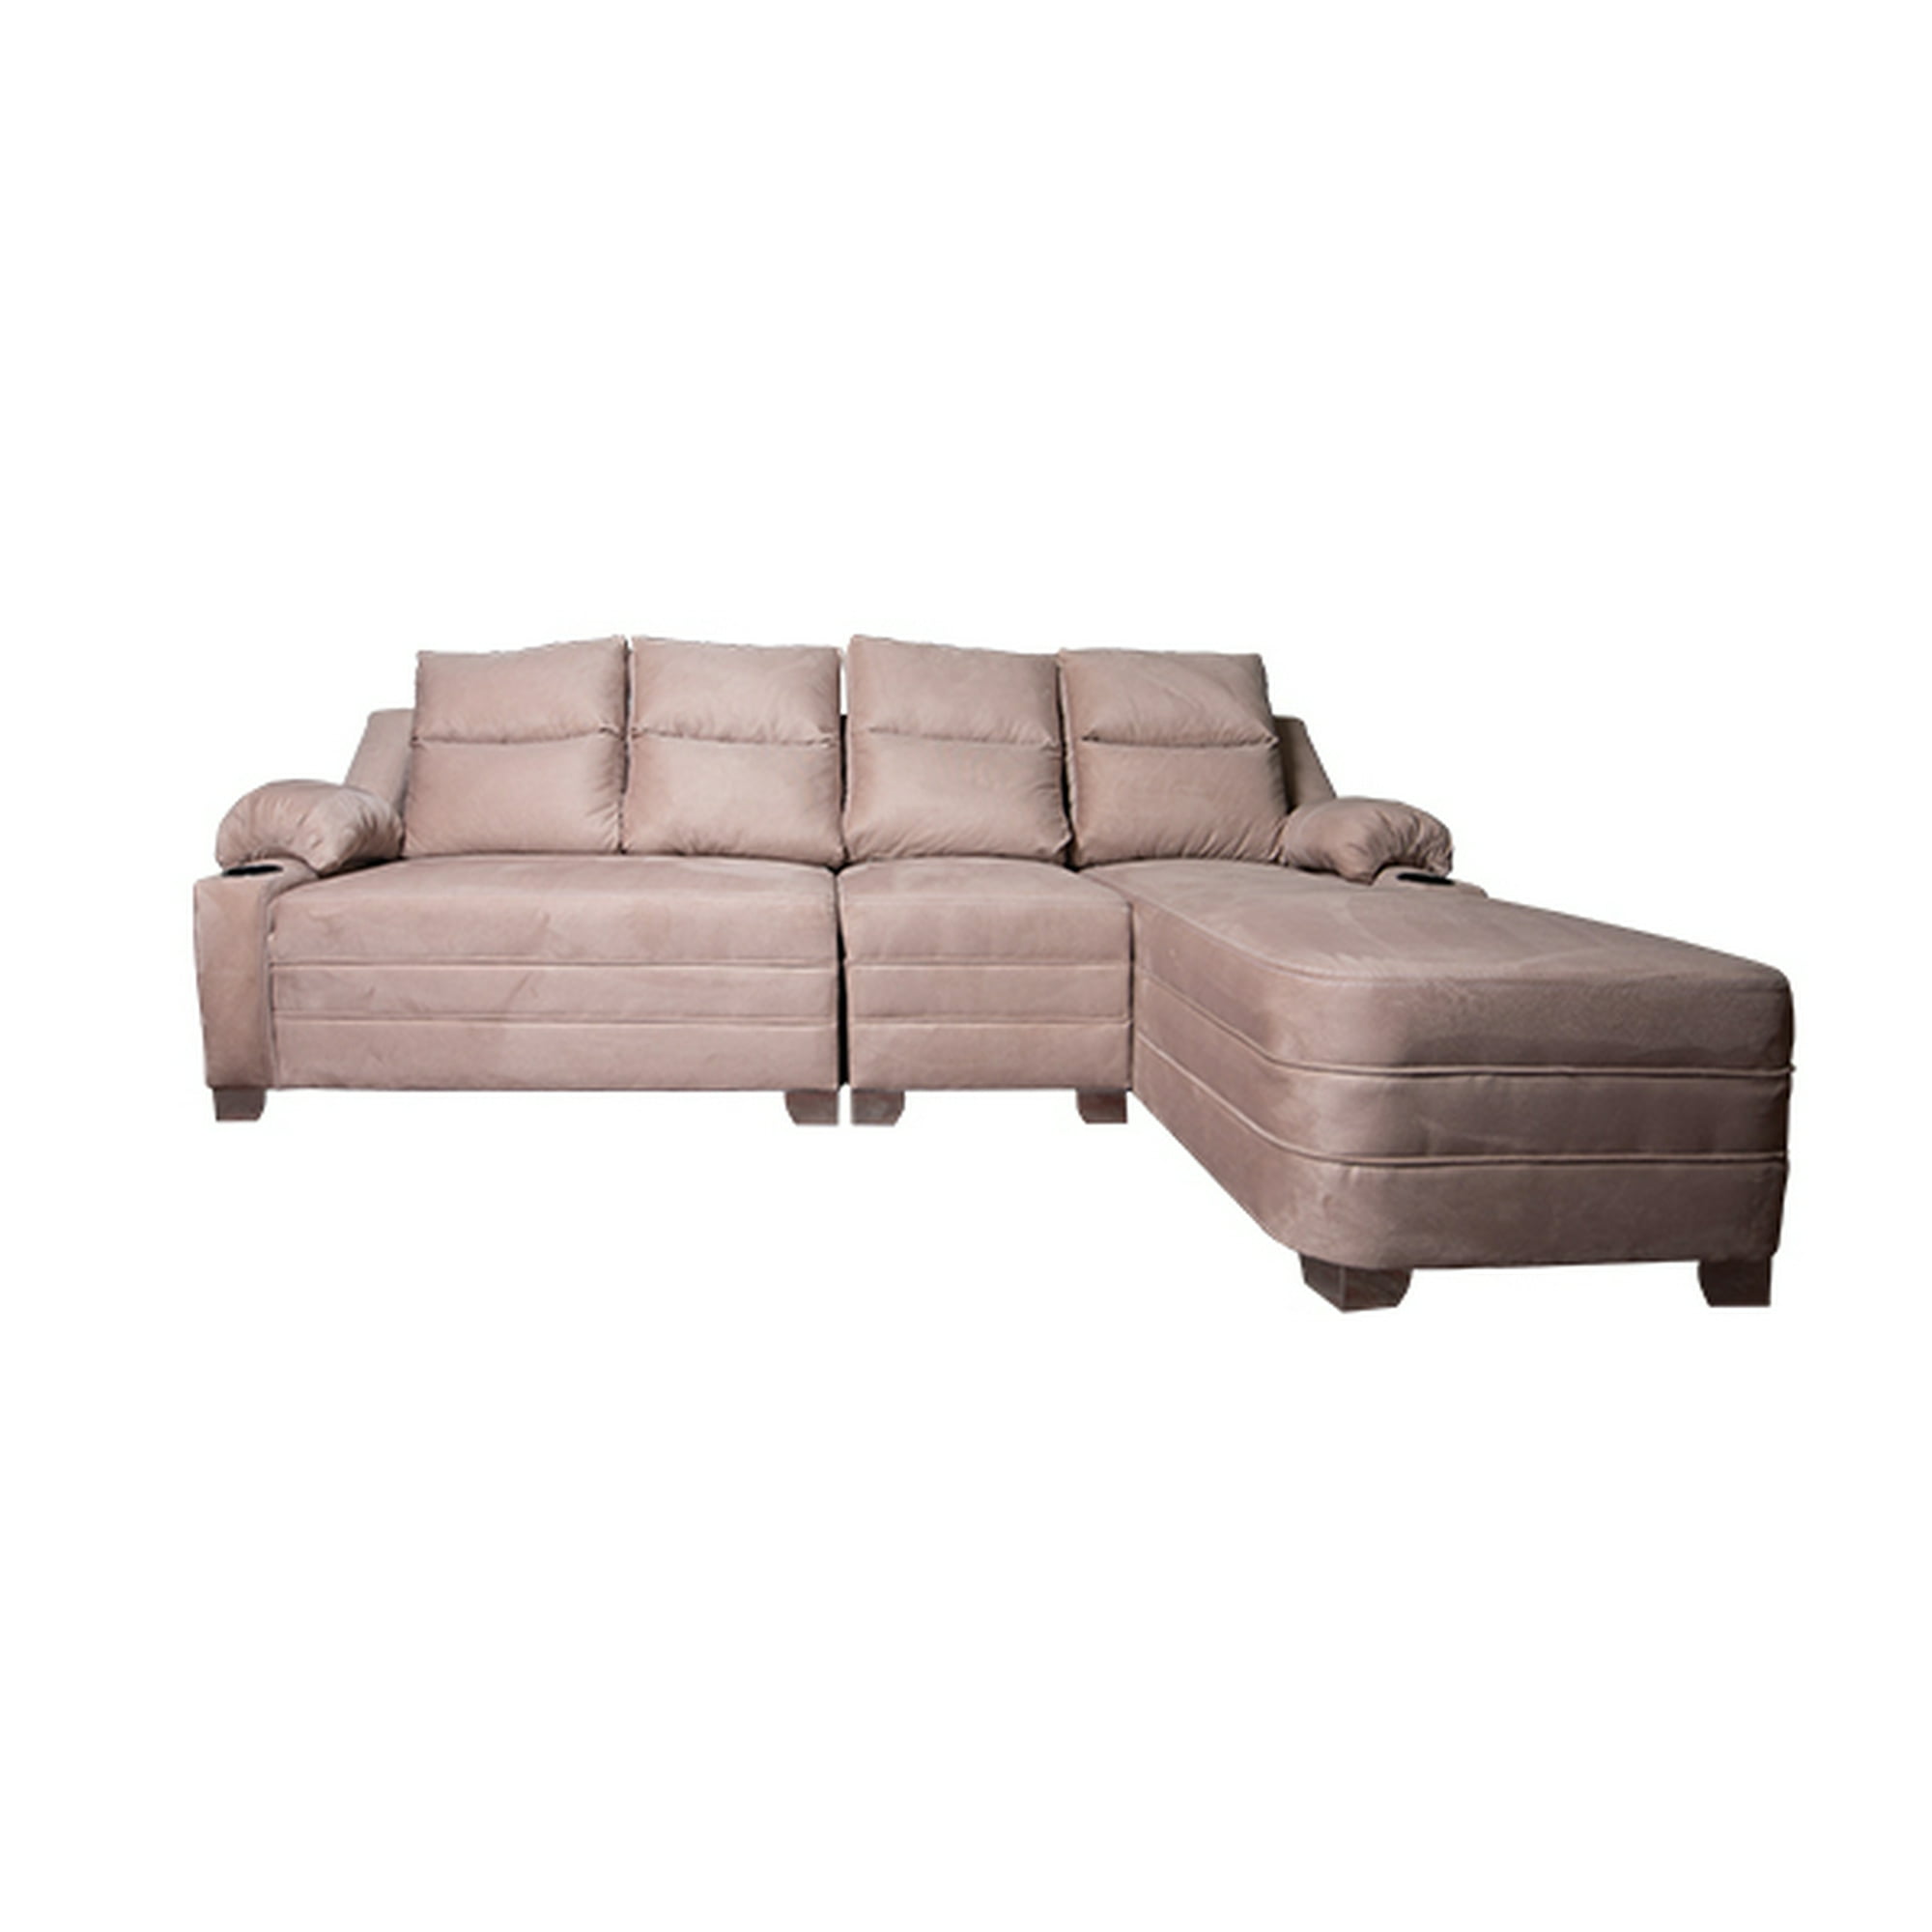 Sala esquinera comoda moderna arizona rosa r21 r21 muebles arizona modeno esquinera